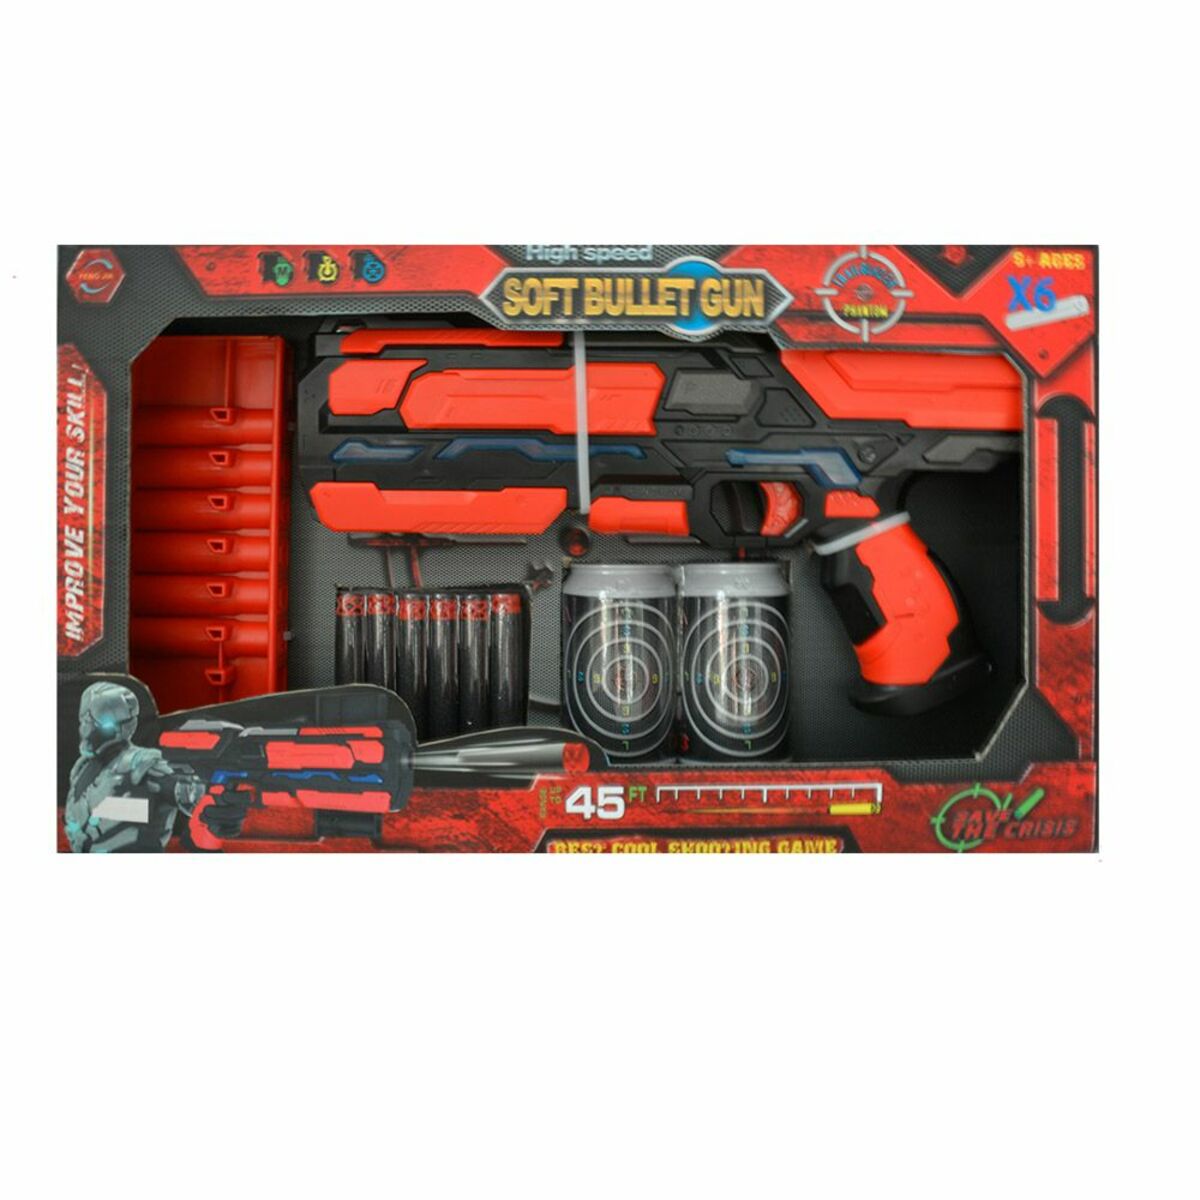 Feng Jia Children's Toy Soft Bullet Gun Set FJ883